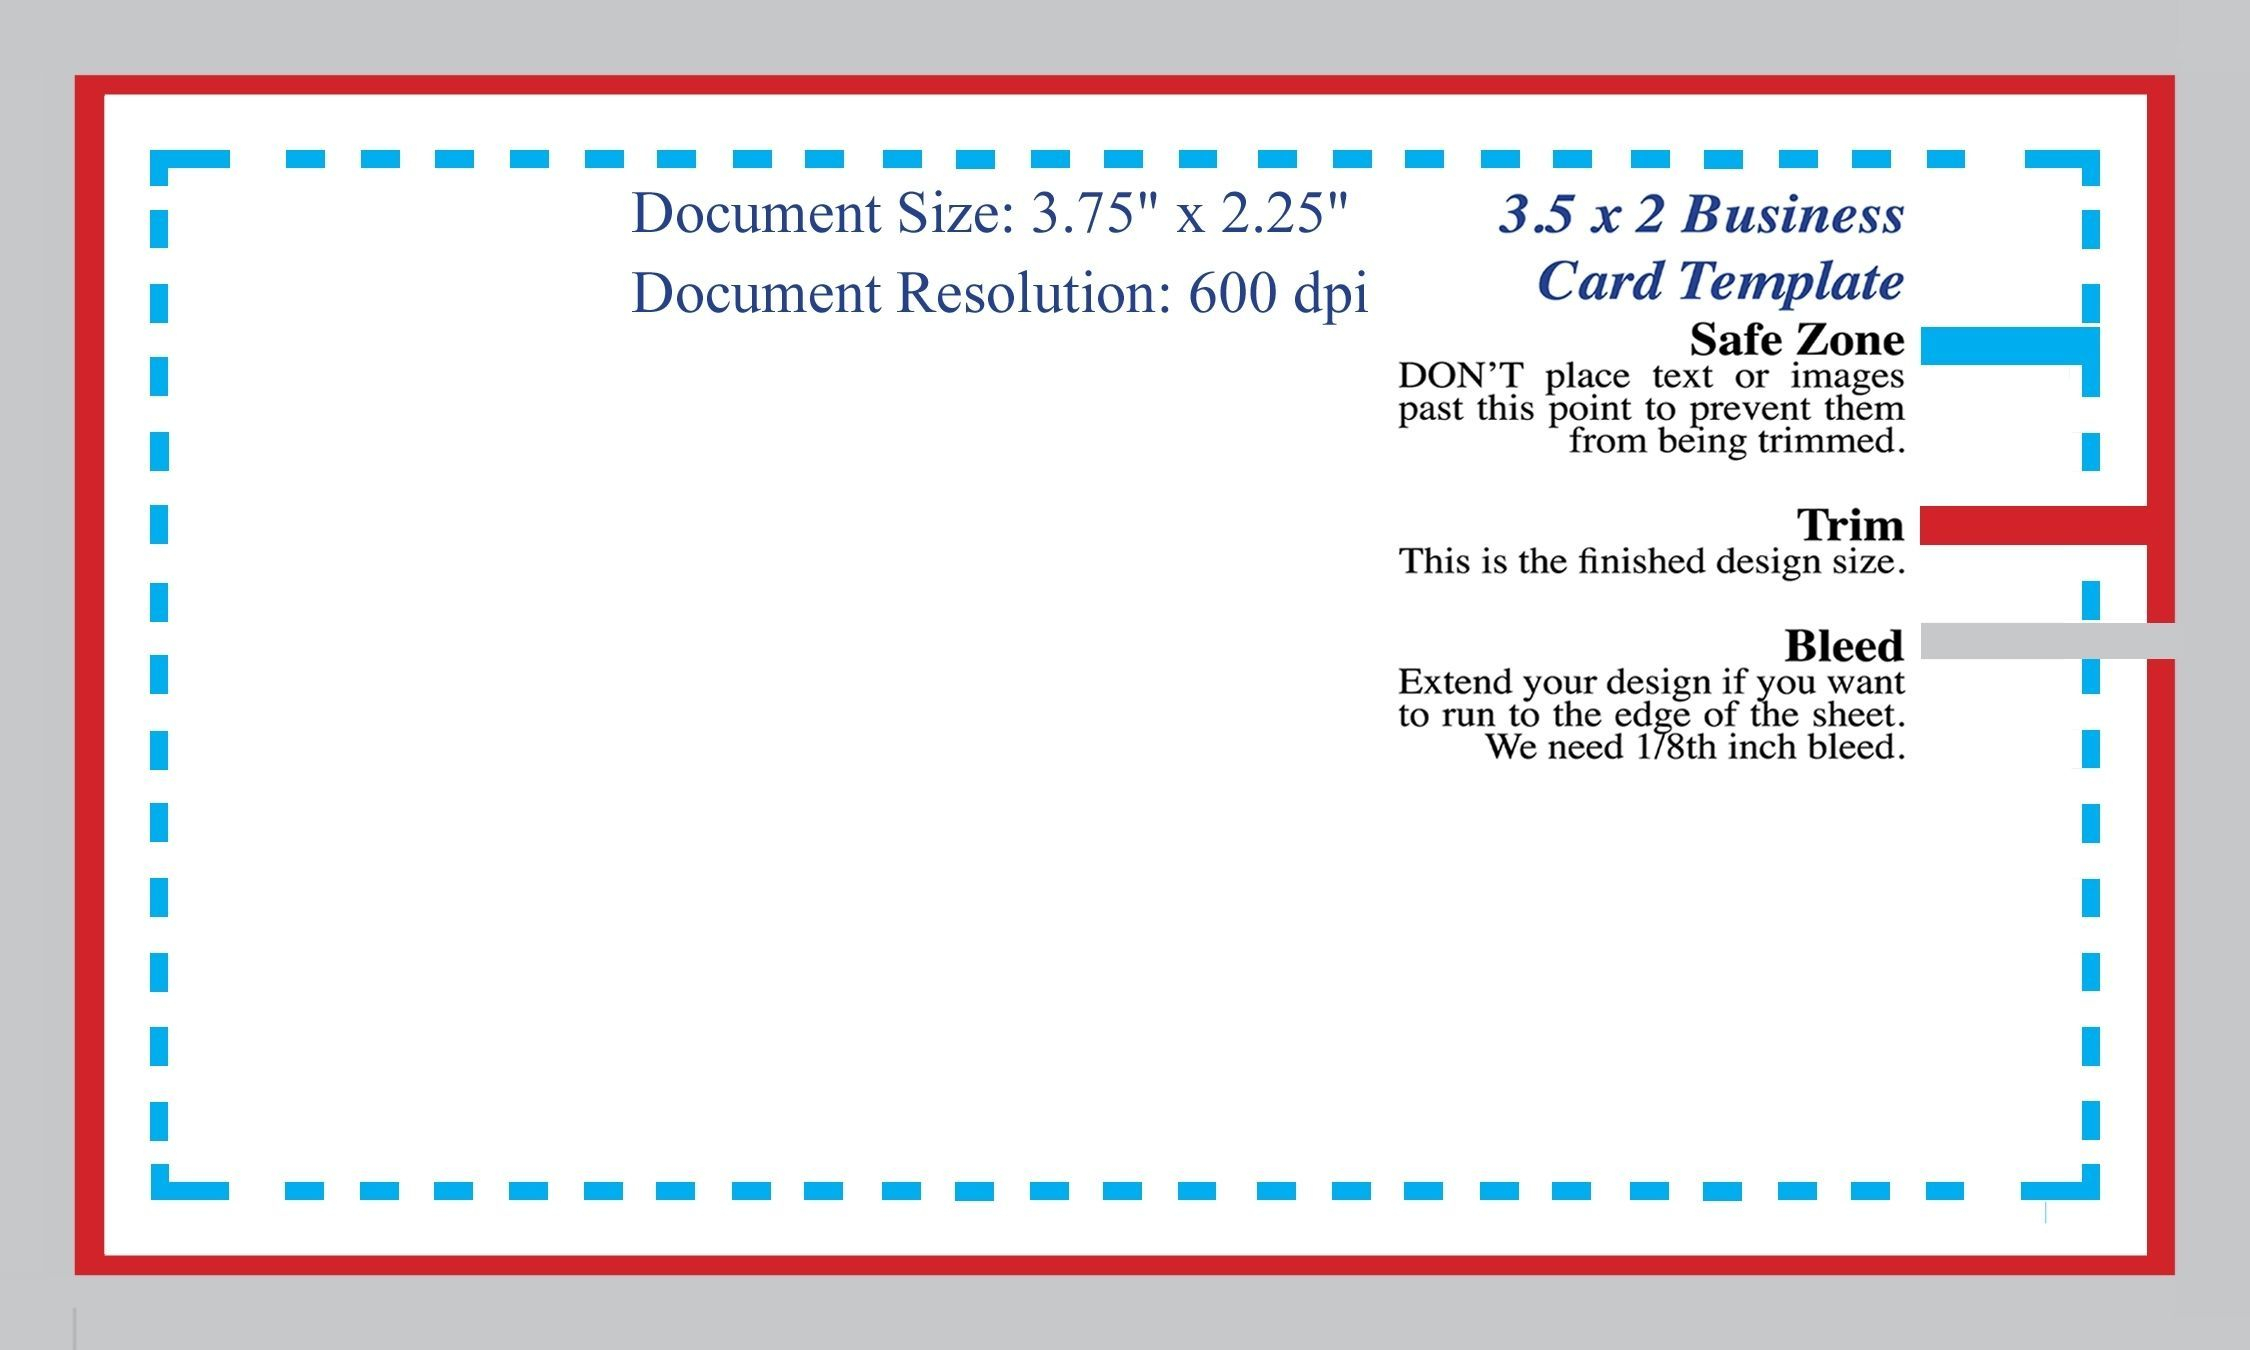 Standard Business Card Blank Template Photoshop Template Within Business Card Size Template Photoshop